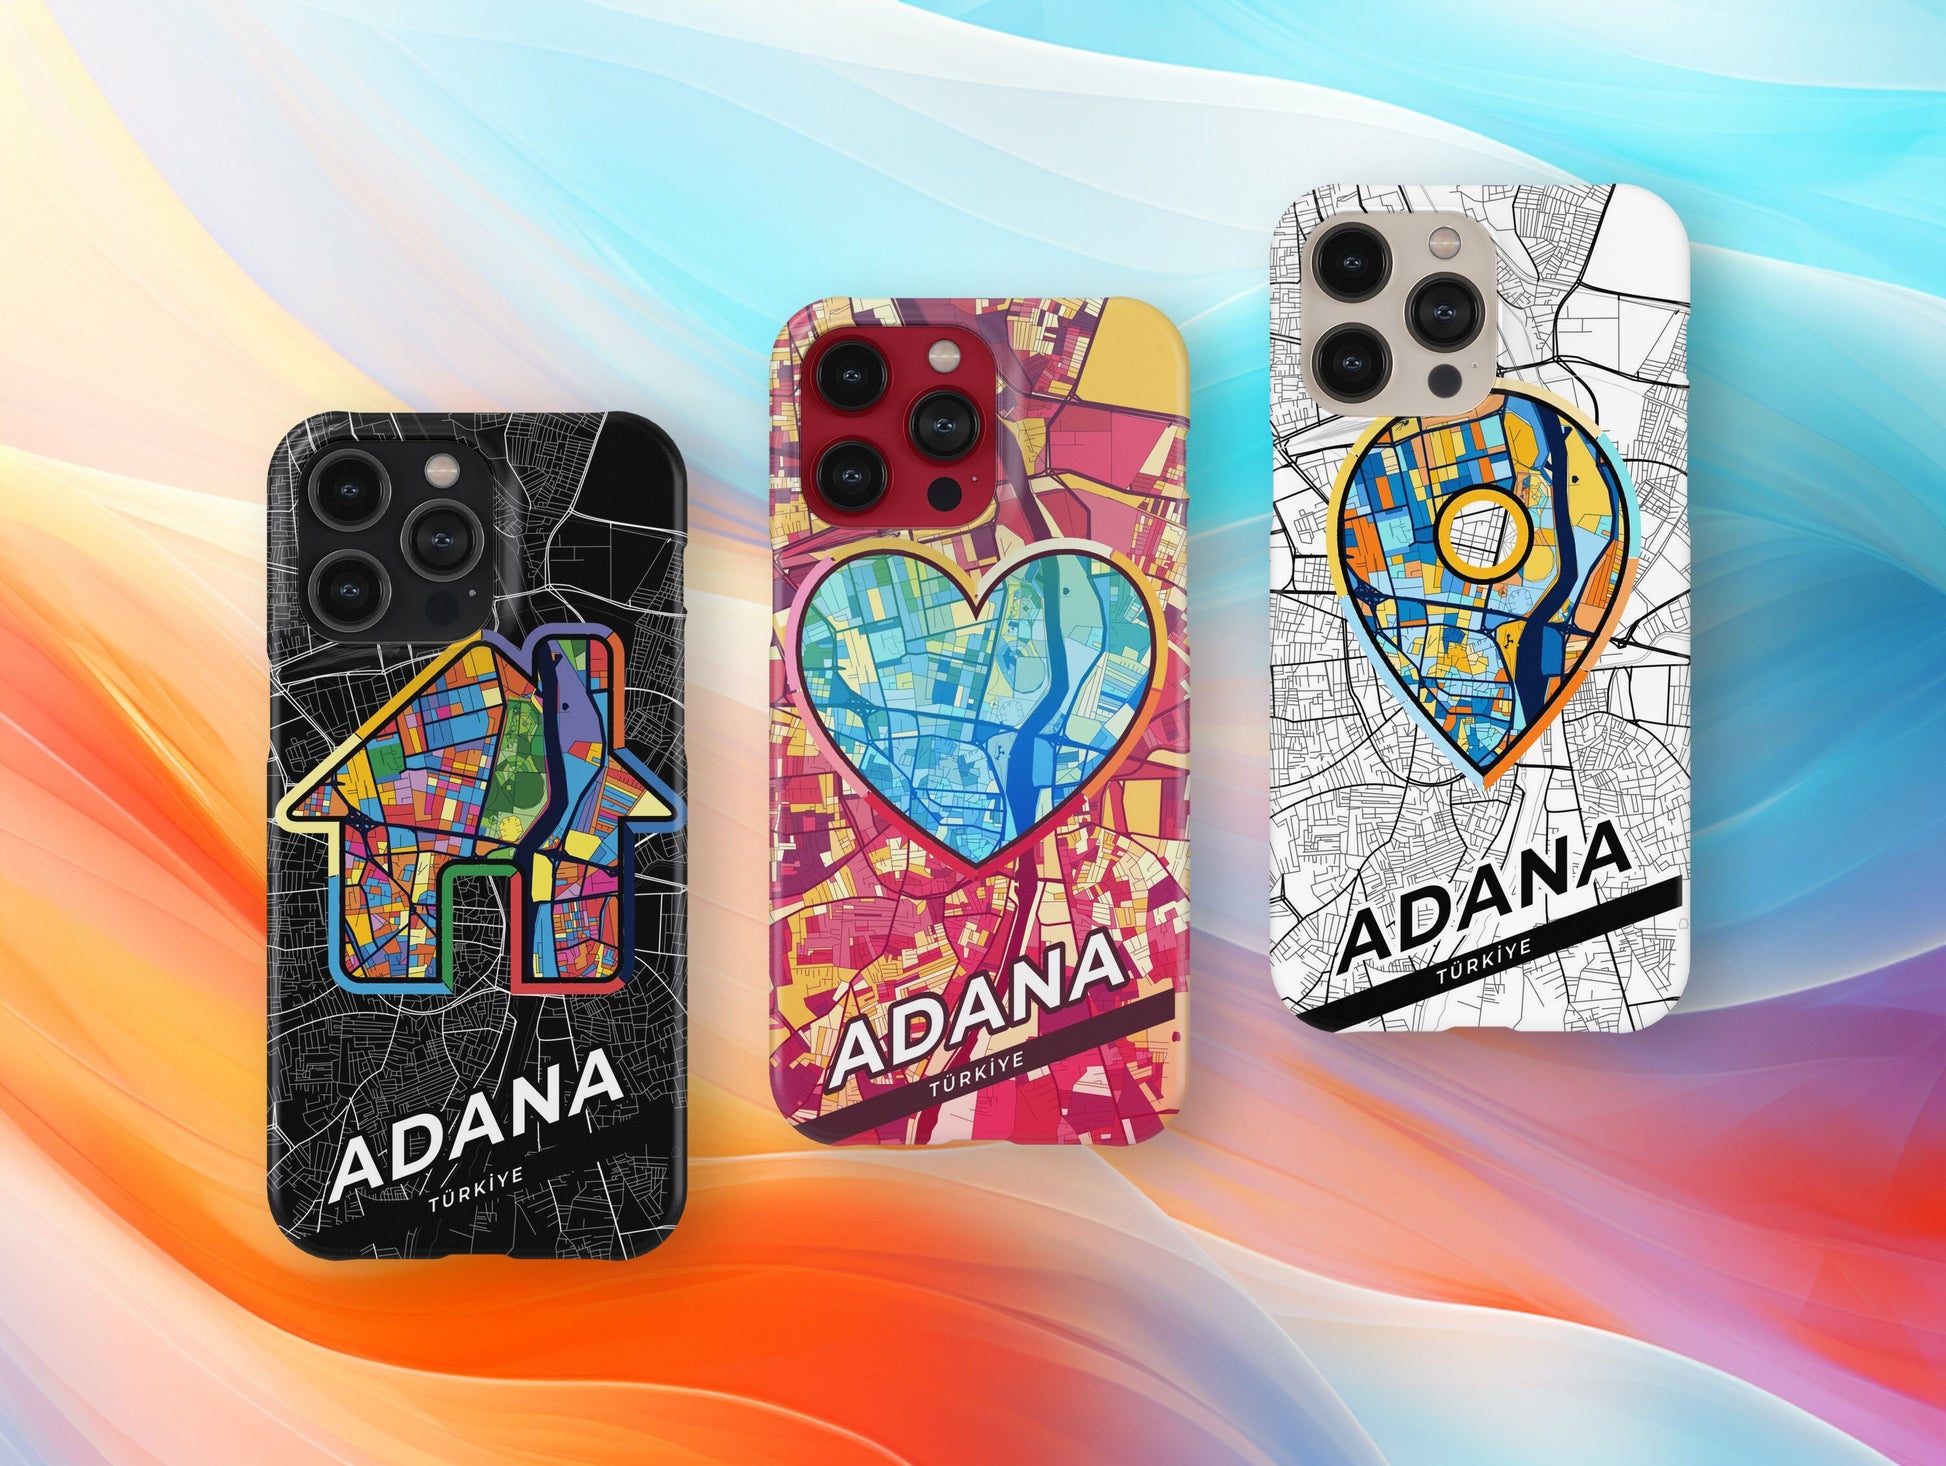 Adana Turkey slim phone case with colorful icon. Birthday, wedding or housewarming gift. Couple match cases.